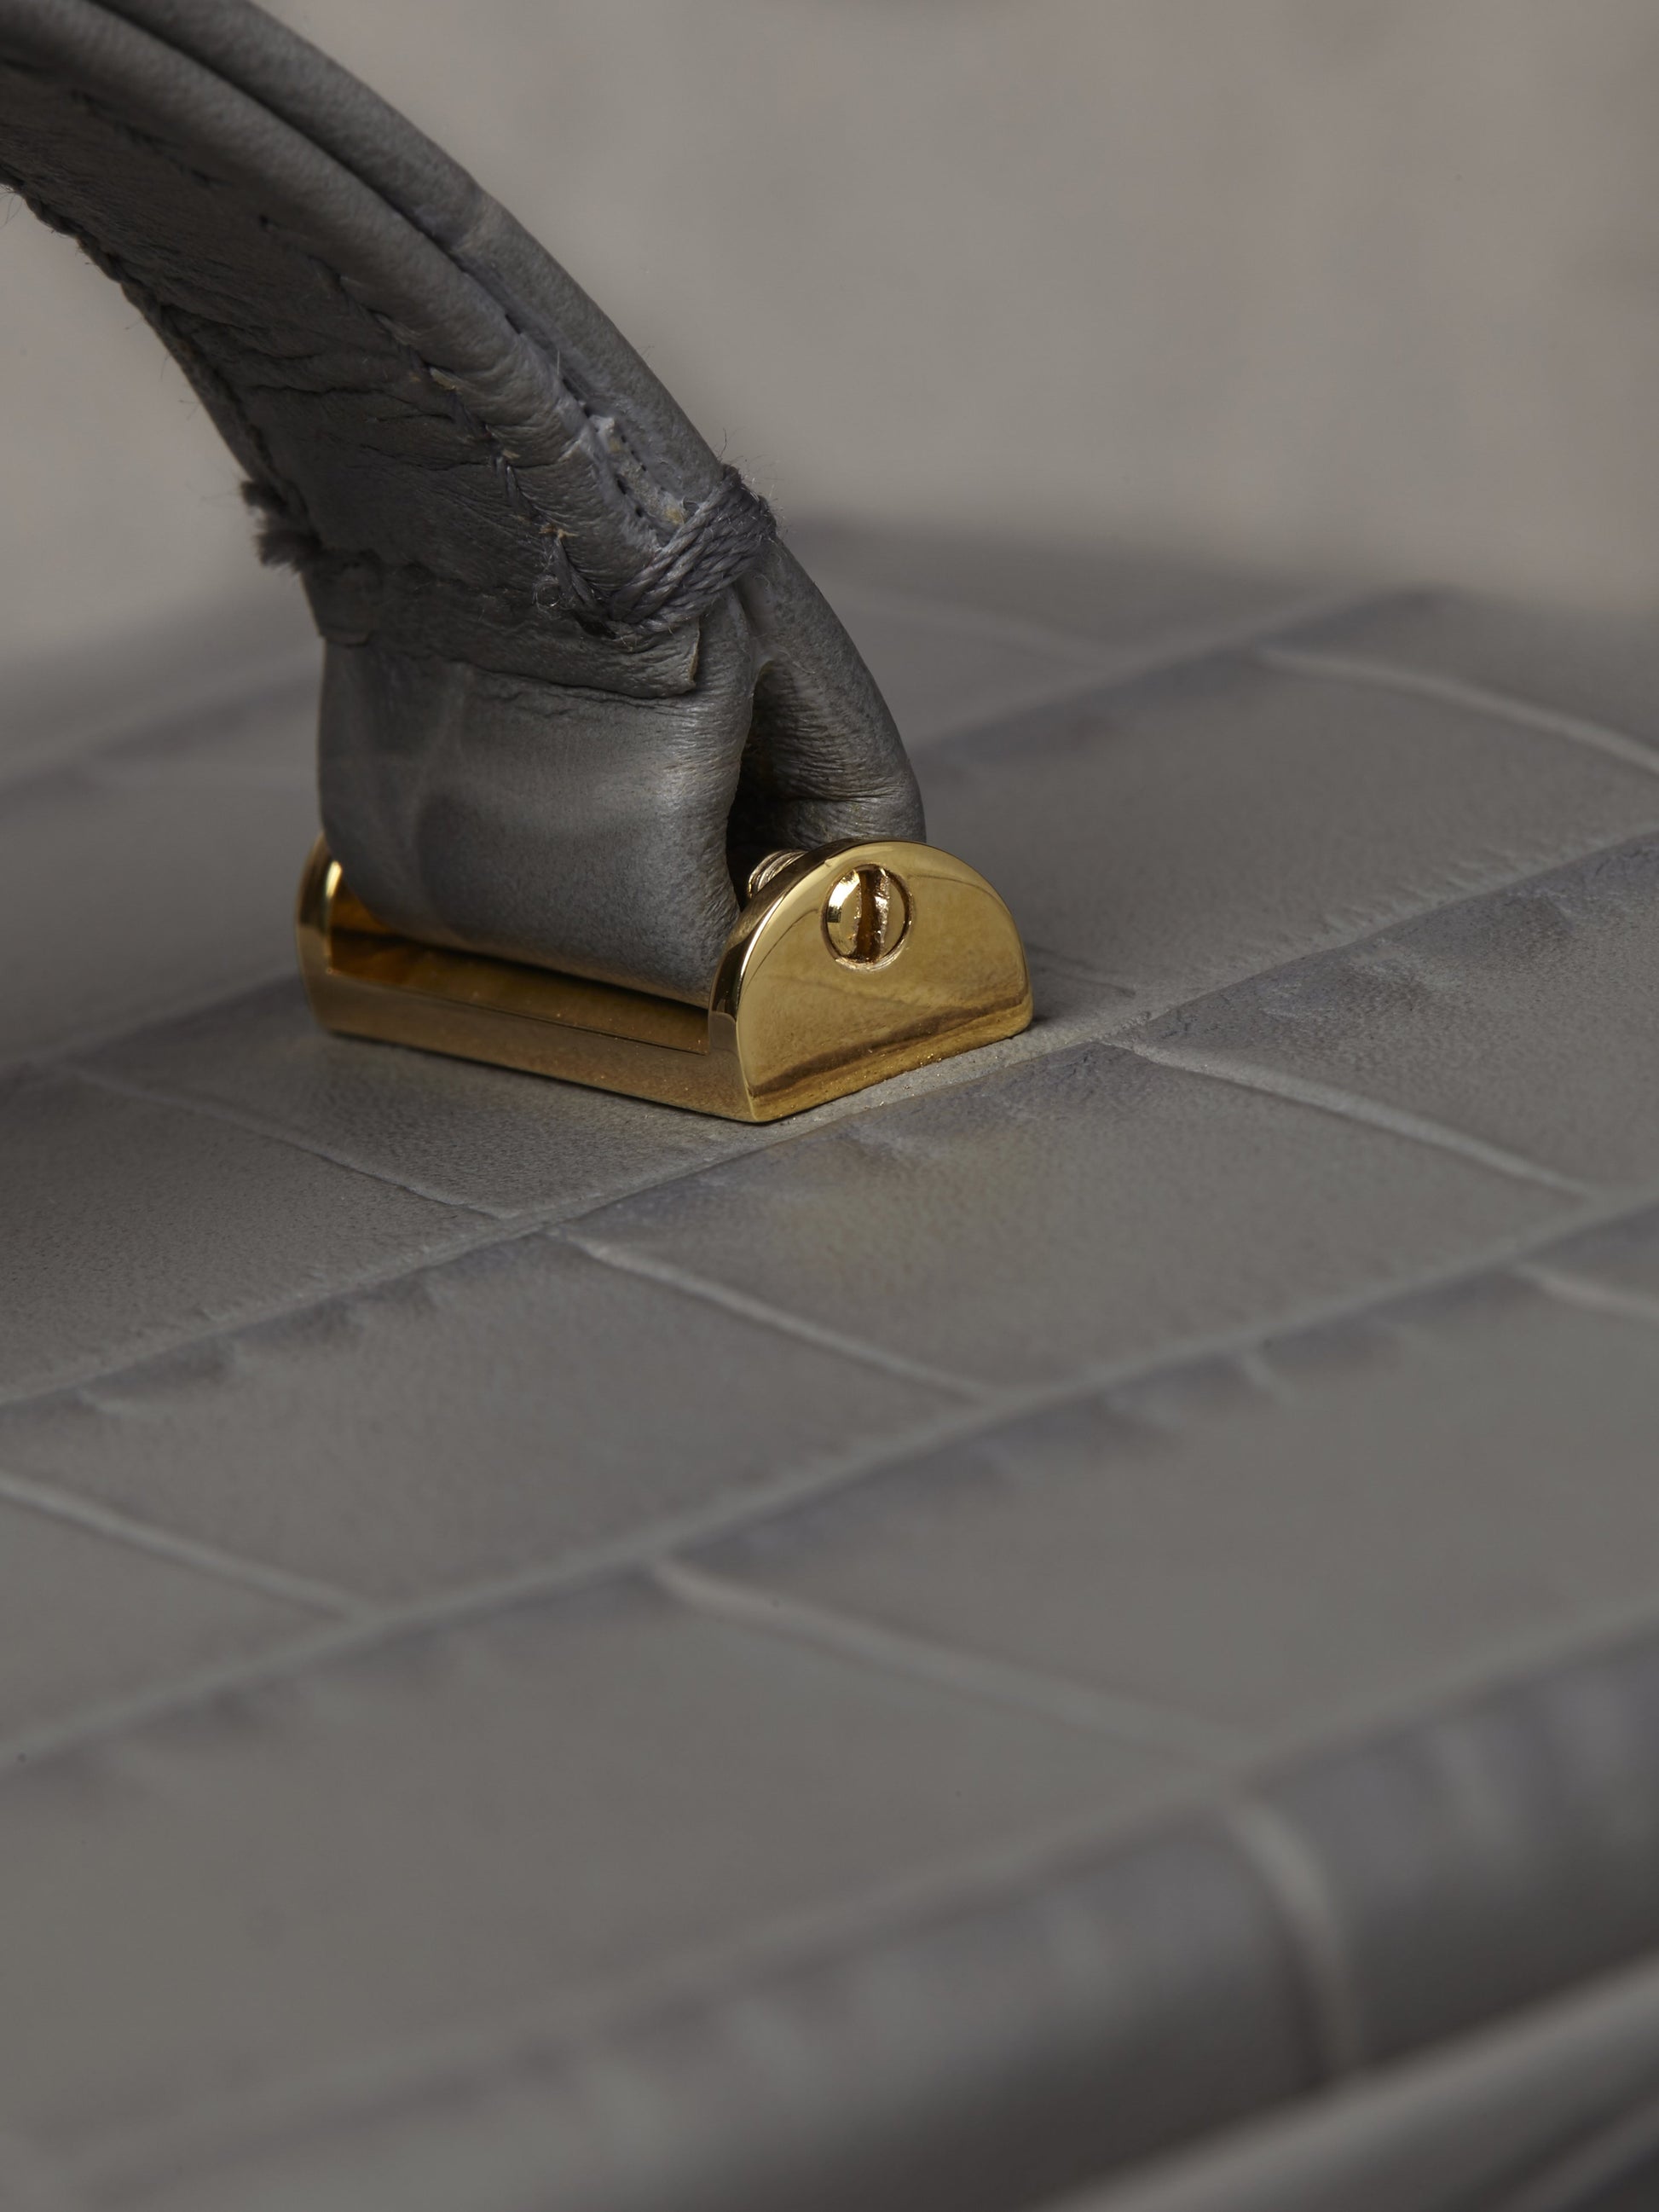 Atelier Verdi small grey crocodile print leather vanity case, gold handle clasp detail